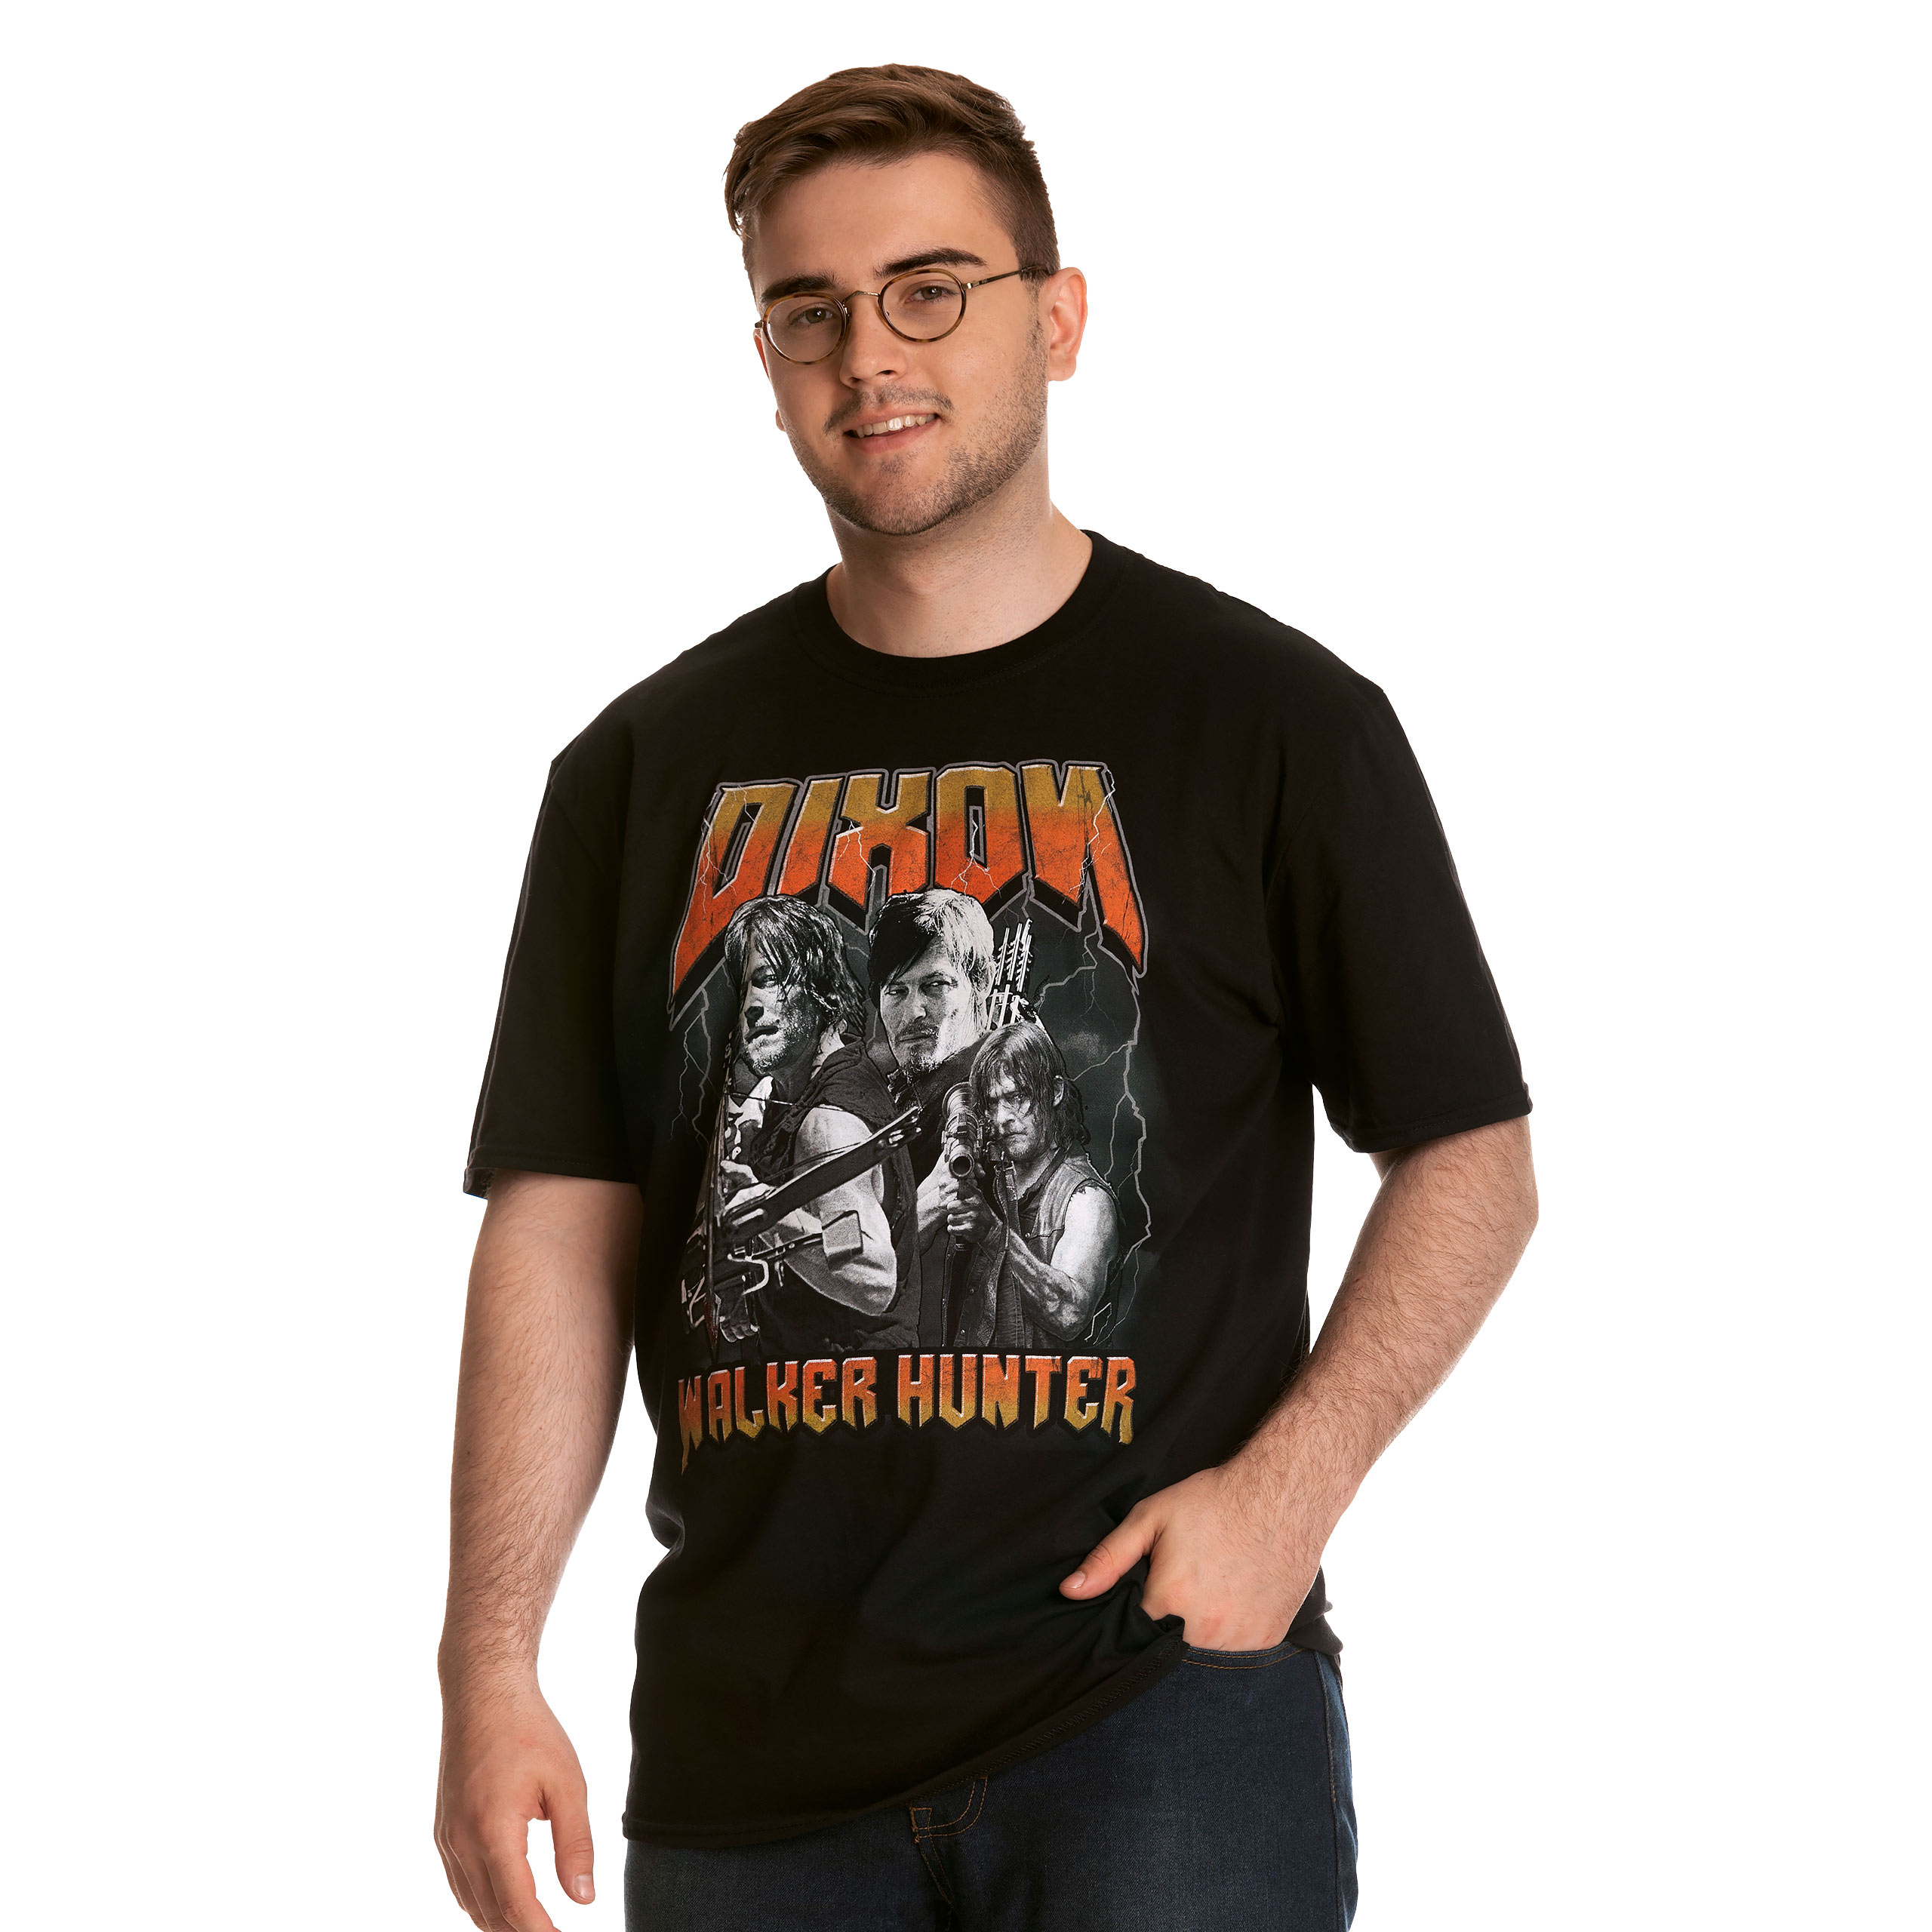 Walking Dead - Dixon Walker Hunter T-Shirt schwarz